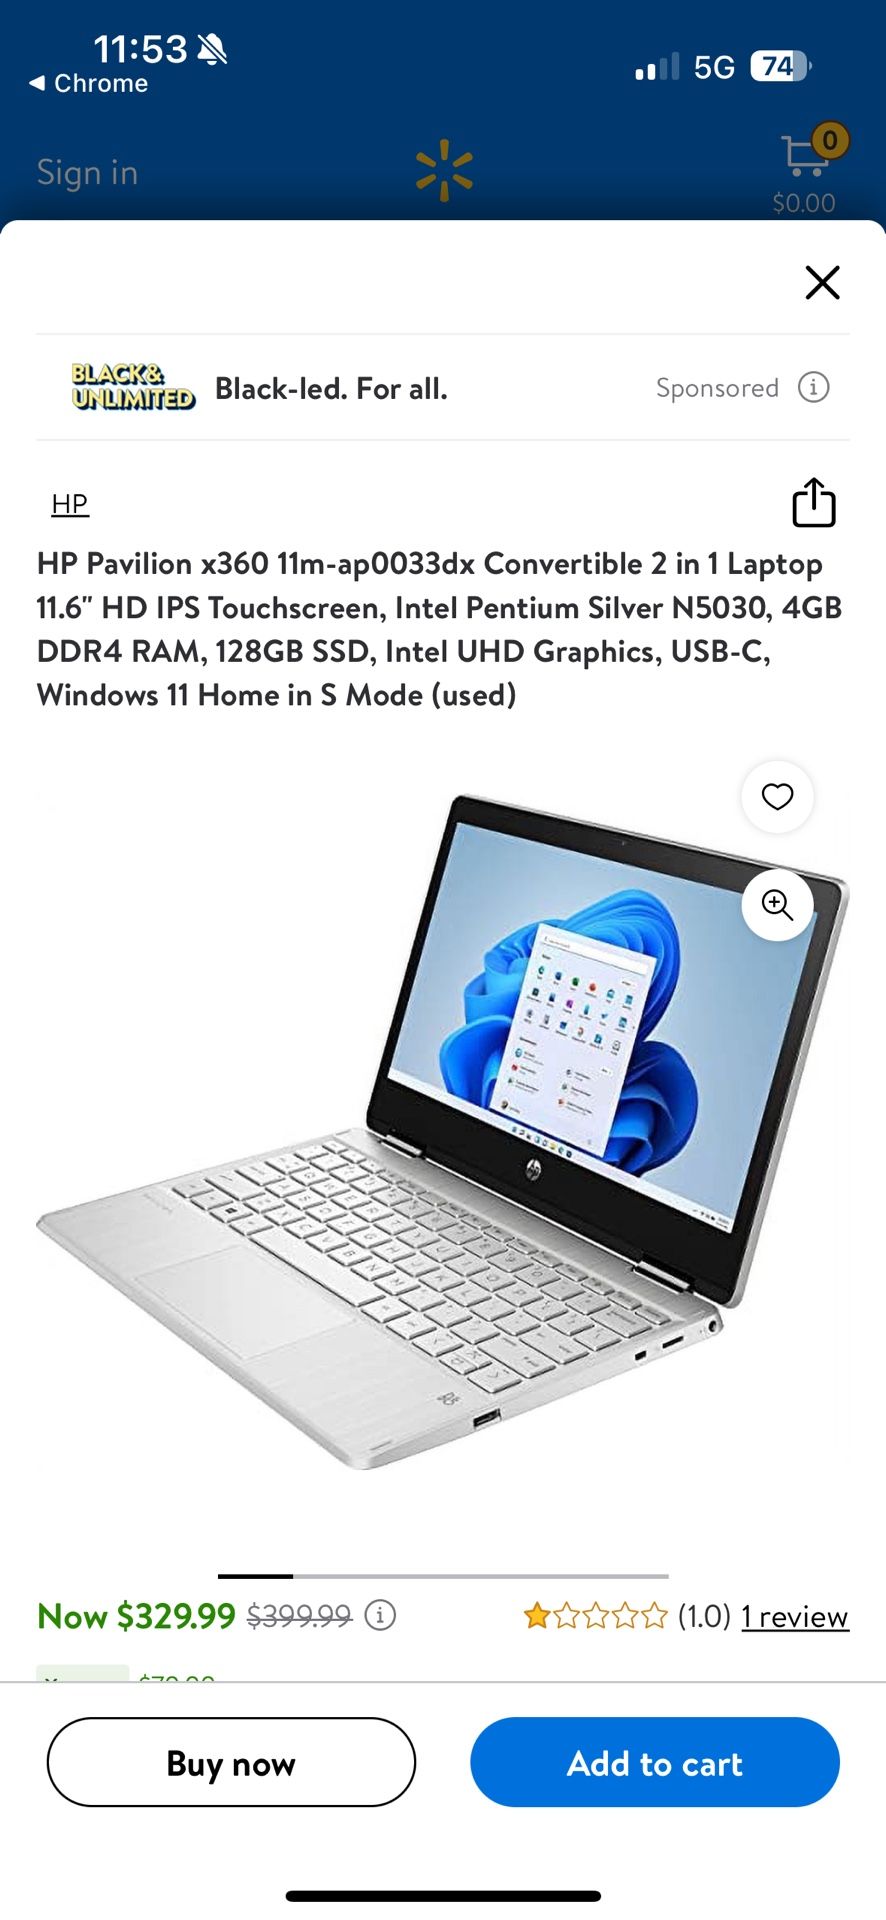 HP Pavilion x360 11m-ap0033dx Convertible 2 in 1 Laptop 11.6" HD IPS Touchscreen,